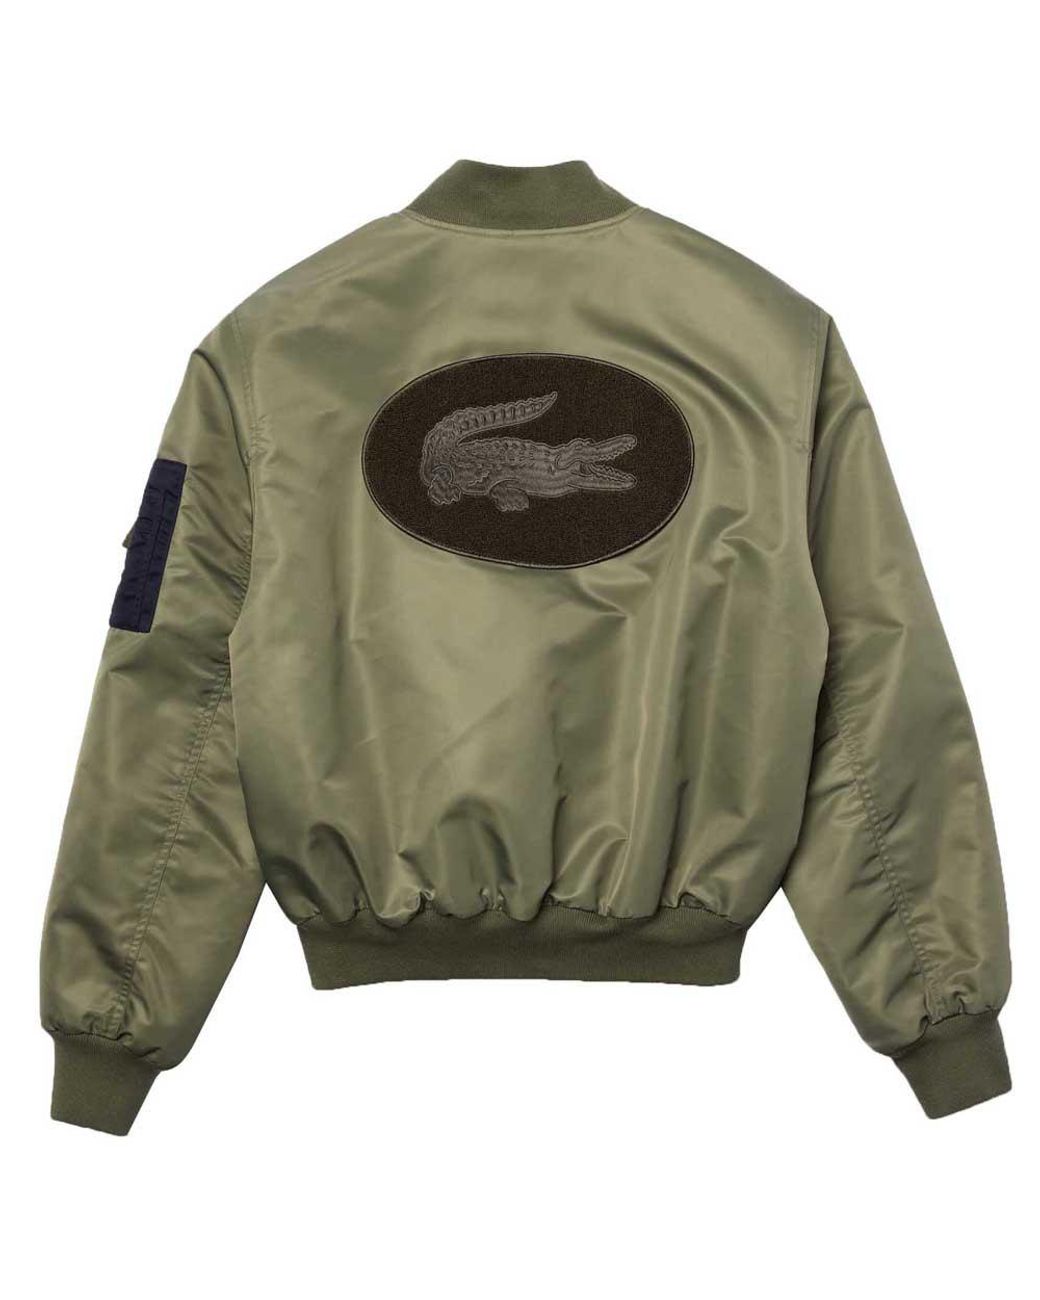 Lacoste Felt Live Oversized Contrast Bomber Jacket in Khaki Green (Green)  for Men - Lyst